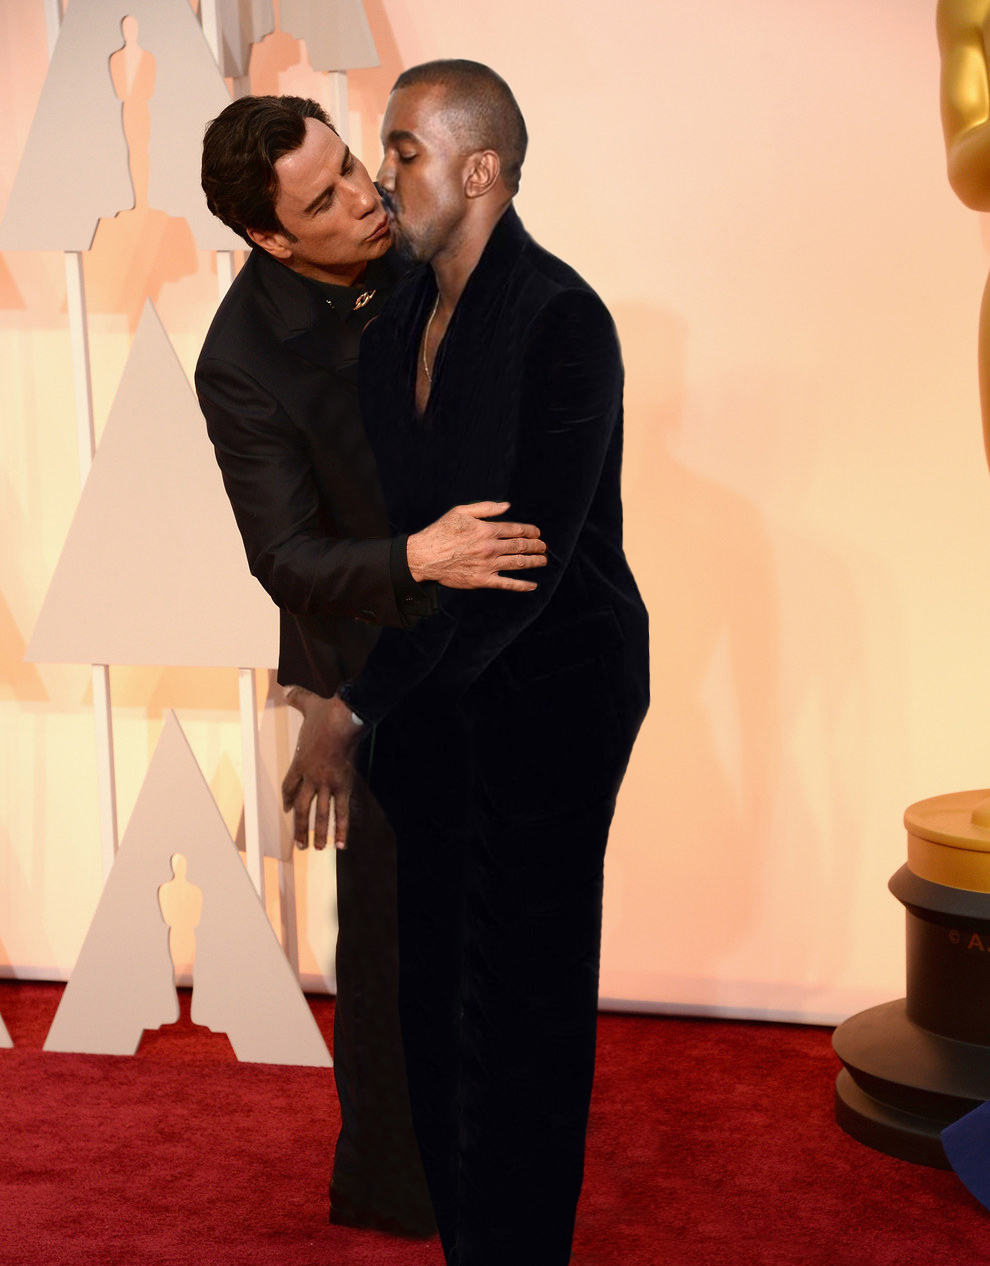 http://www.yzgeneration.com/wp-content/uploads/2015/02/John-Travolta-Embrasse-Scarlett-Johansson-Oscars-4.jpg